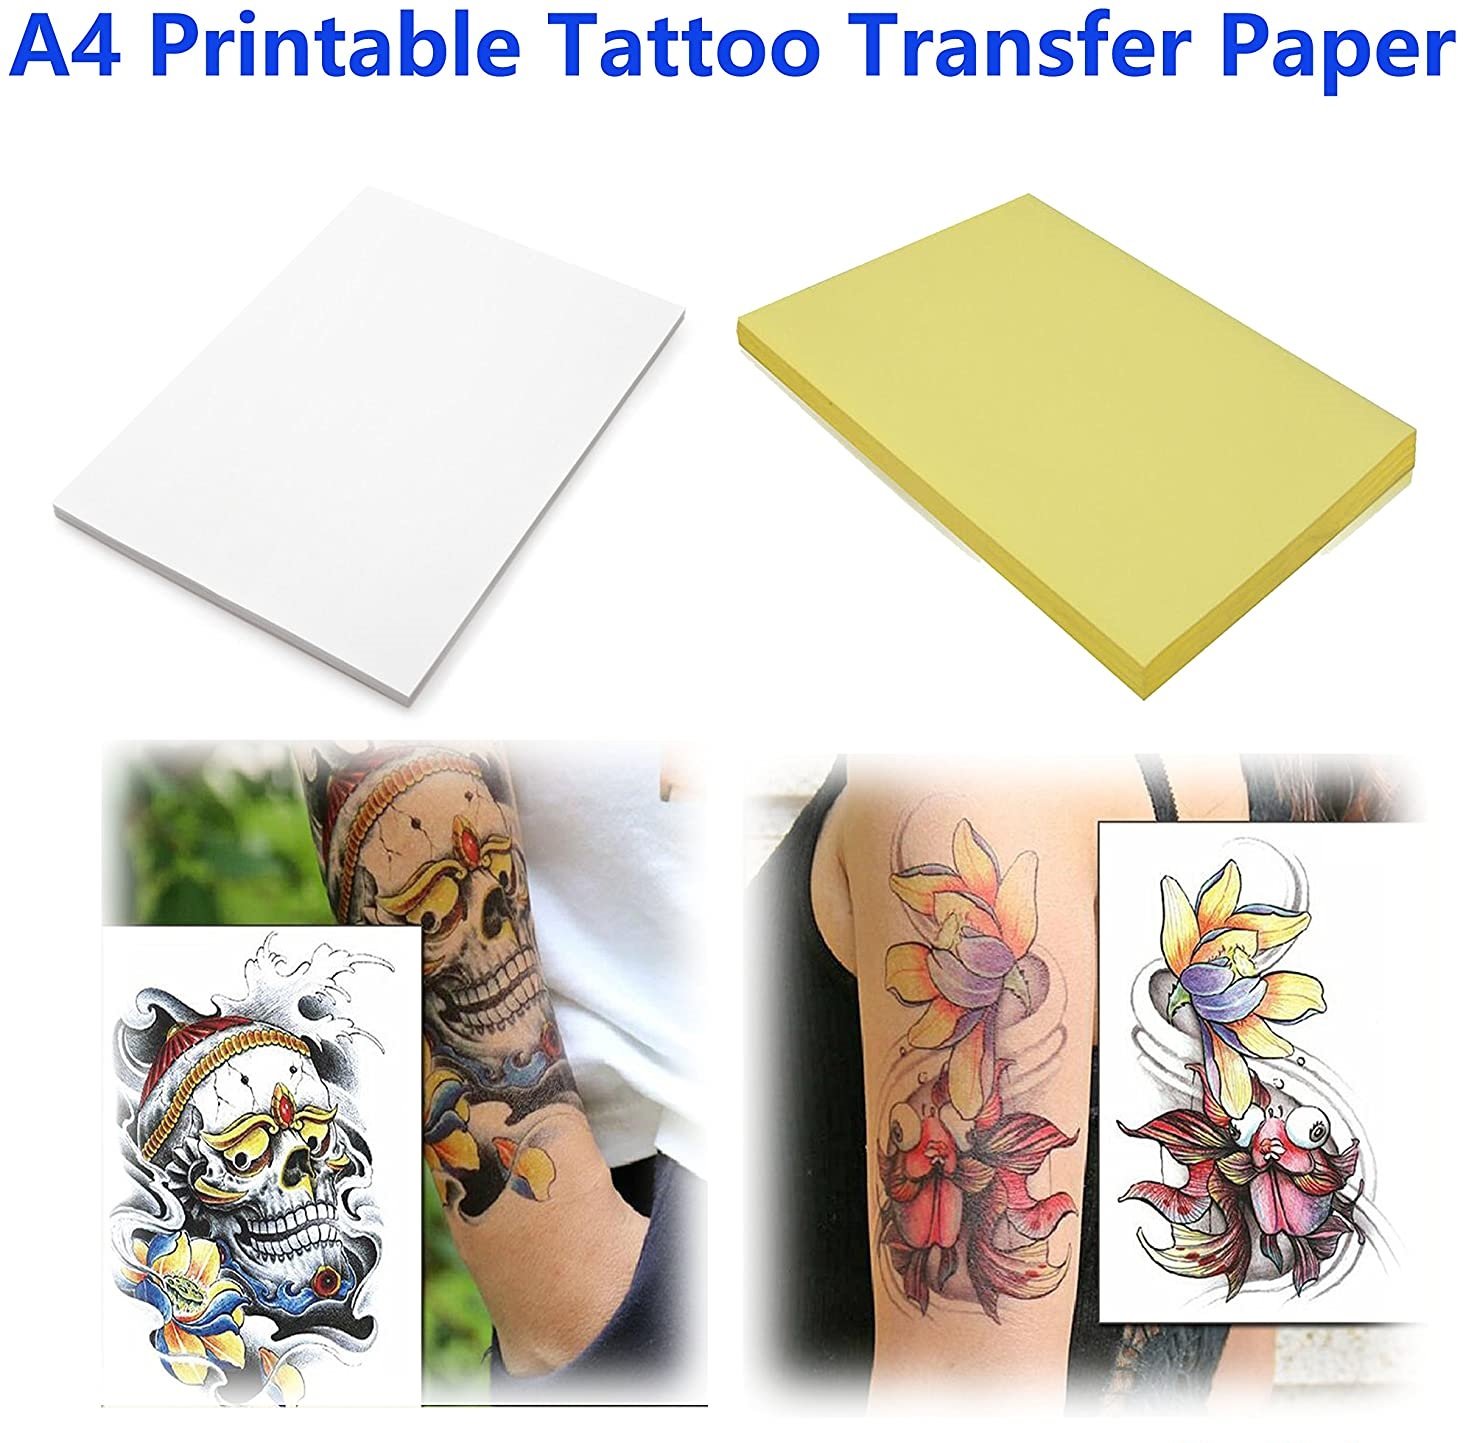 Temporary Tattoo Transfer Paper Printable Smart Buy